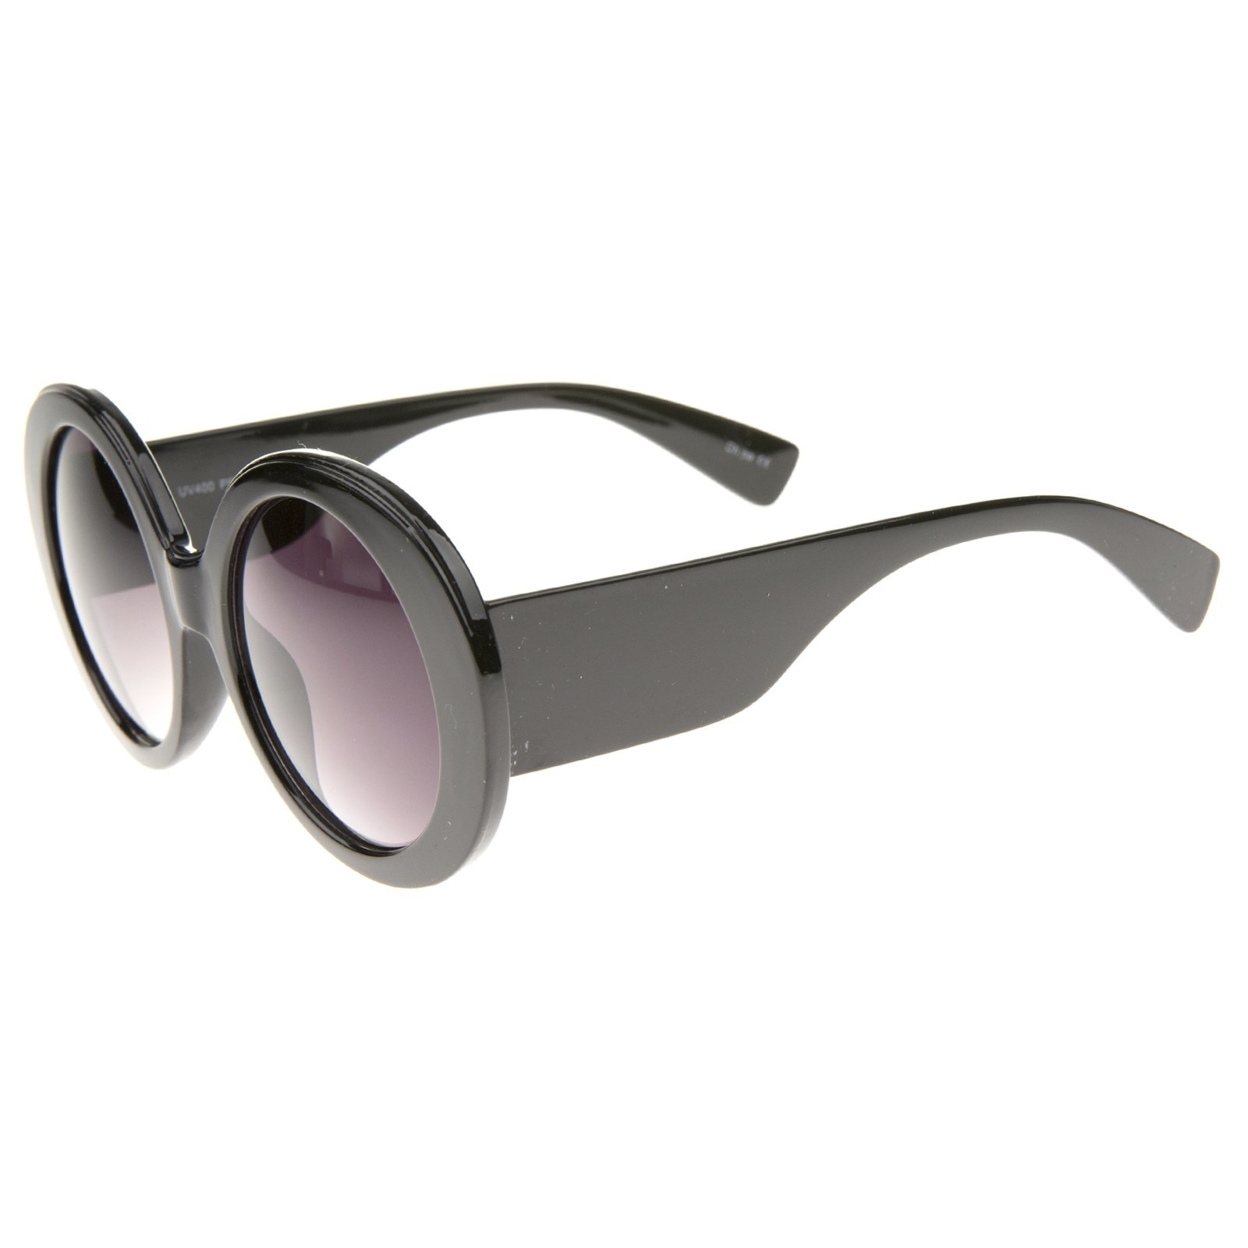 Womens High Fashion Glam Chunky Round Oversize Sunglasses 50mm - Black / Smoke